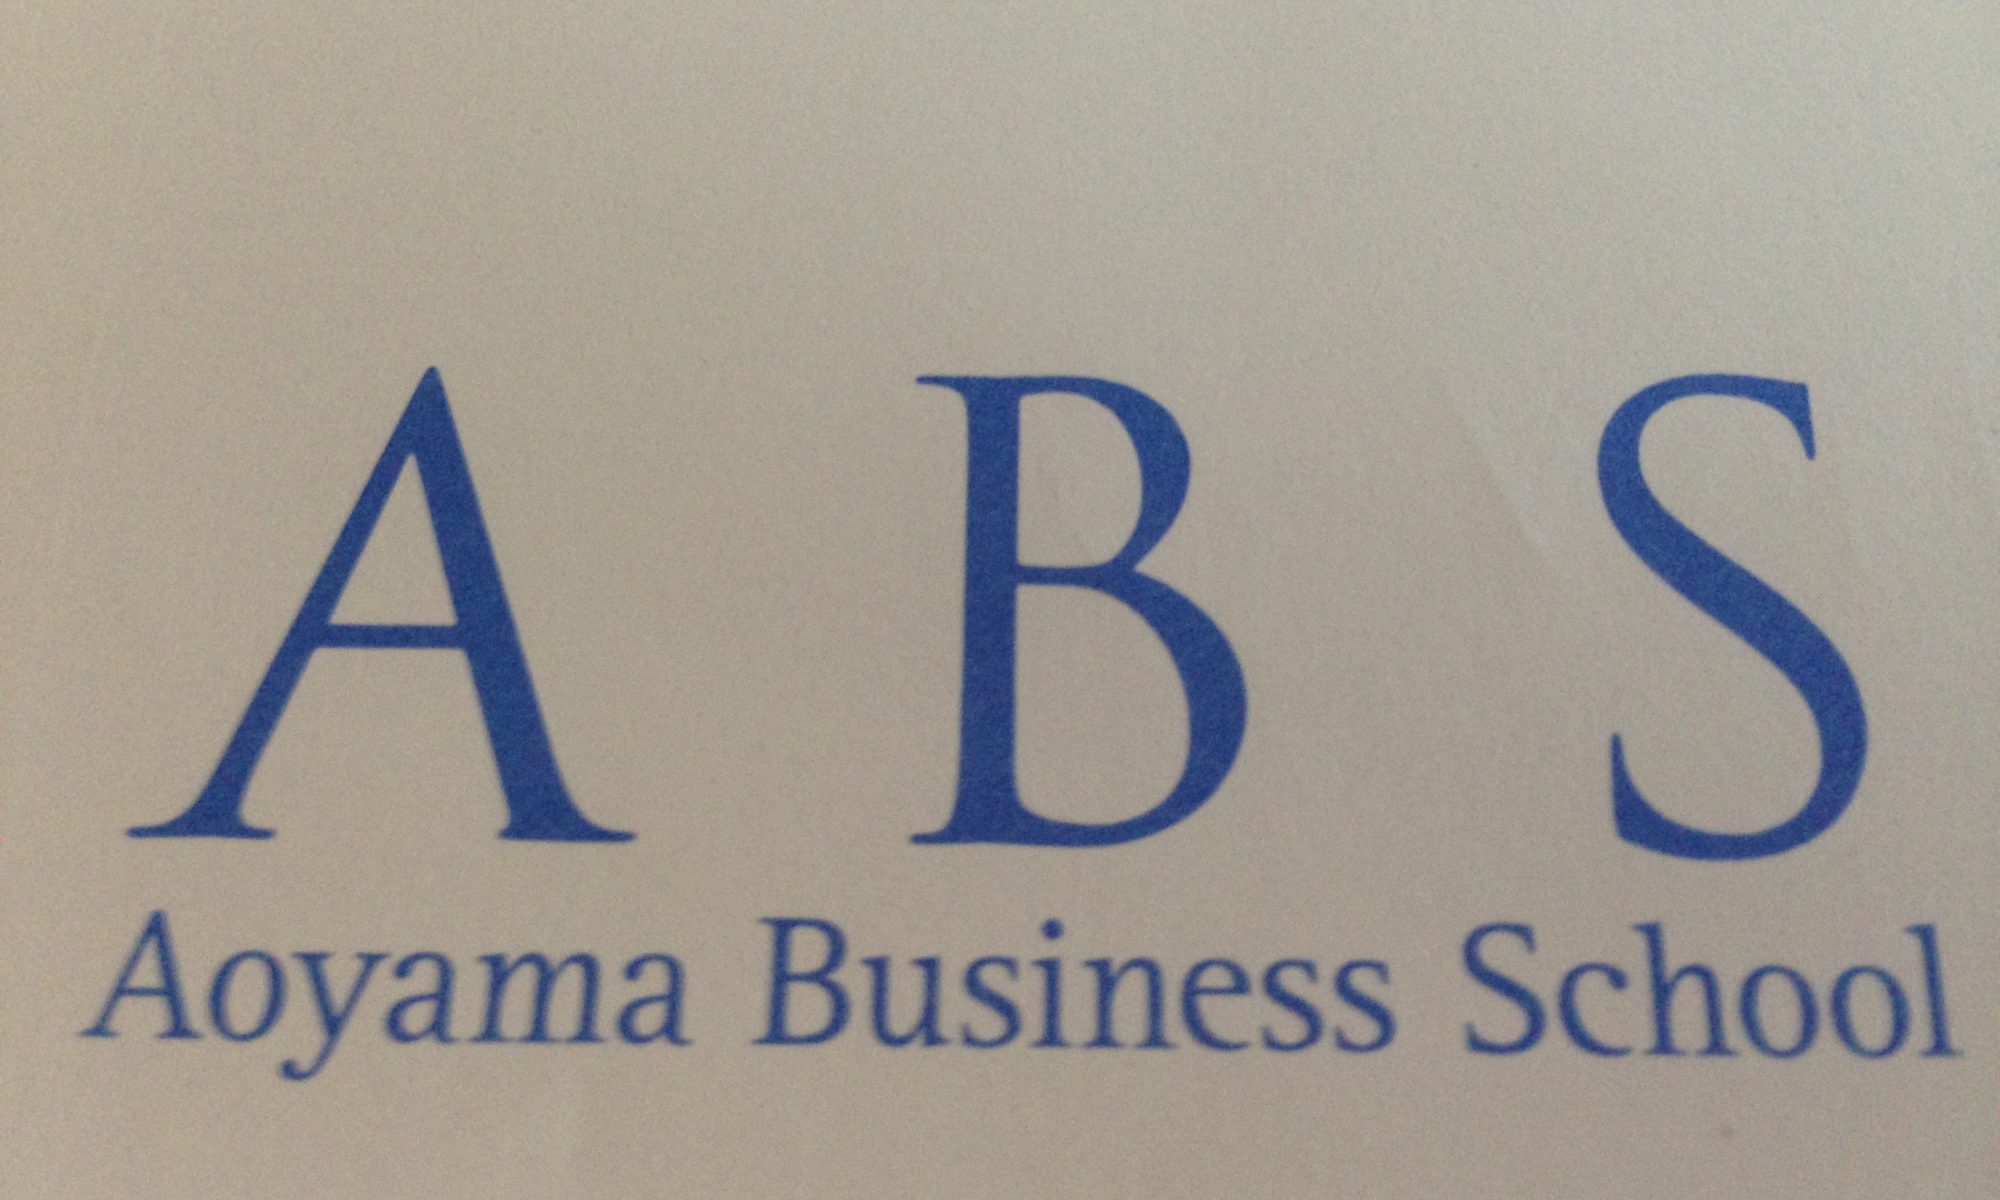 aoyama business school